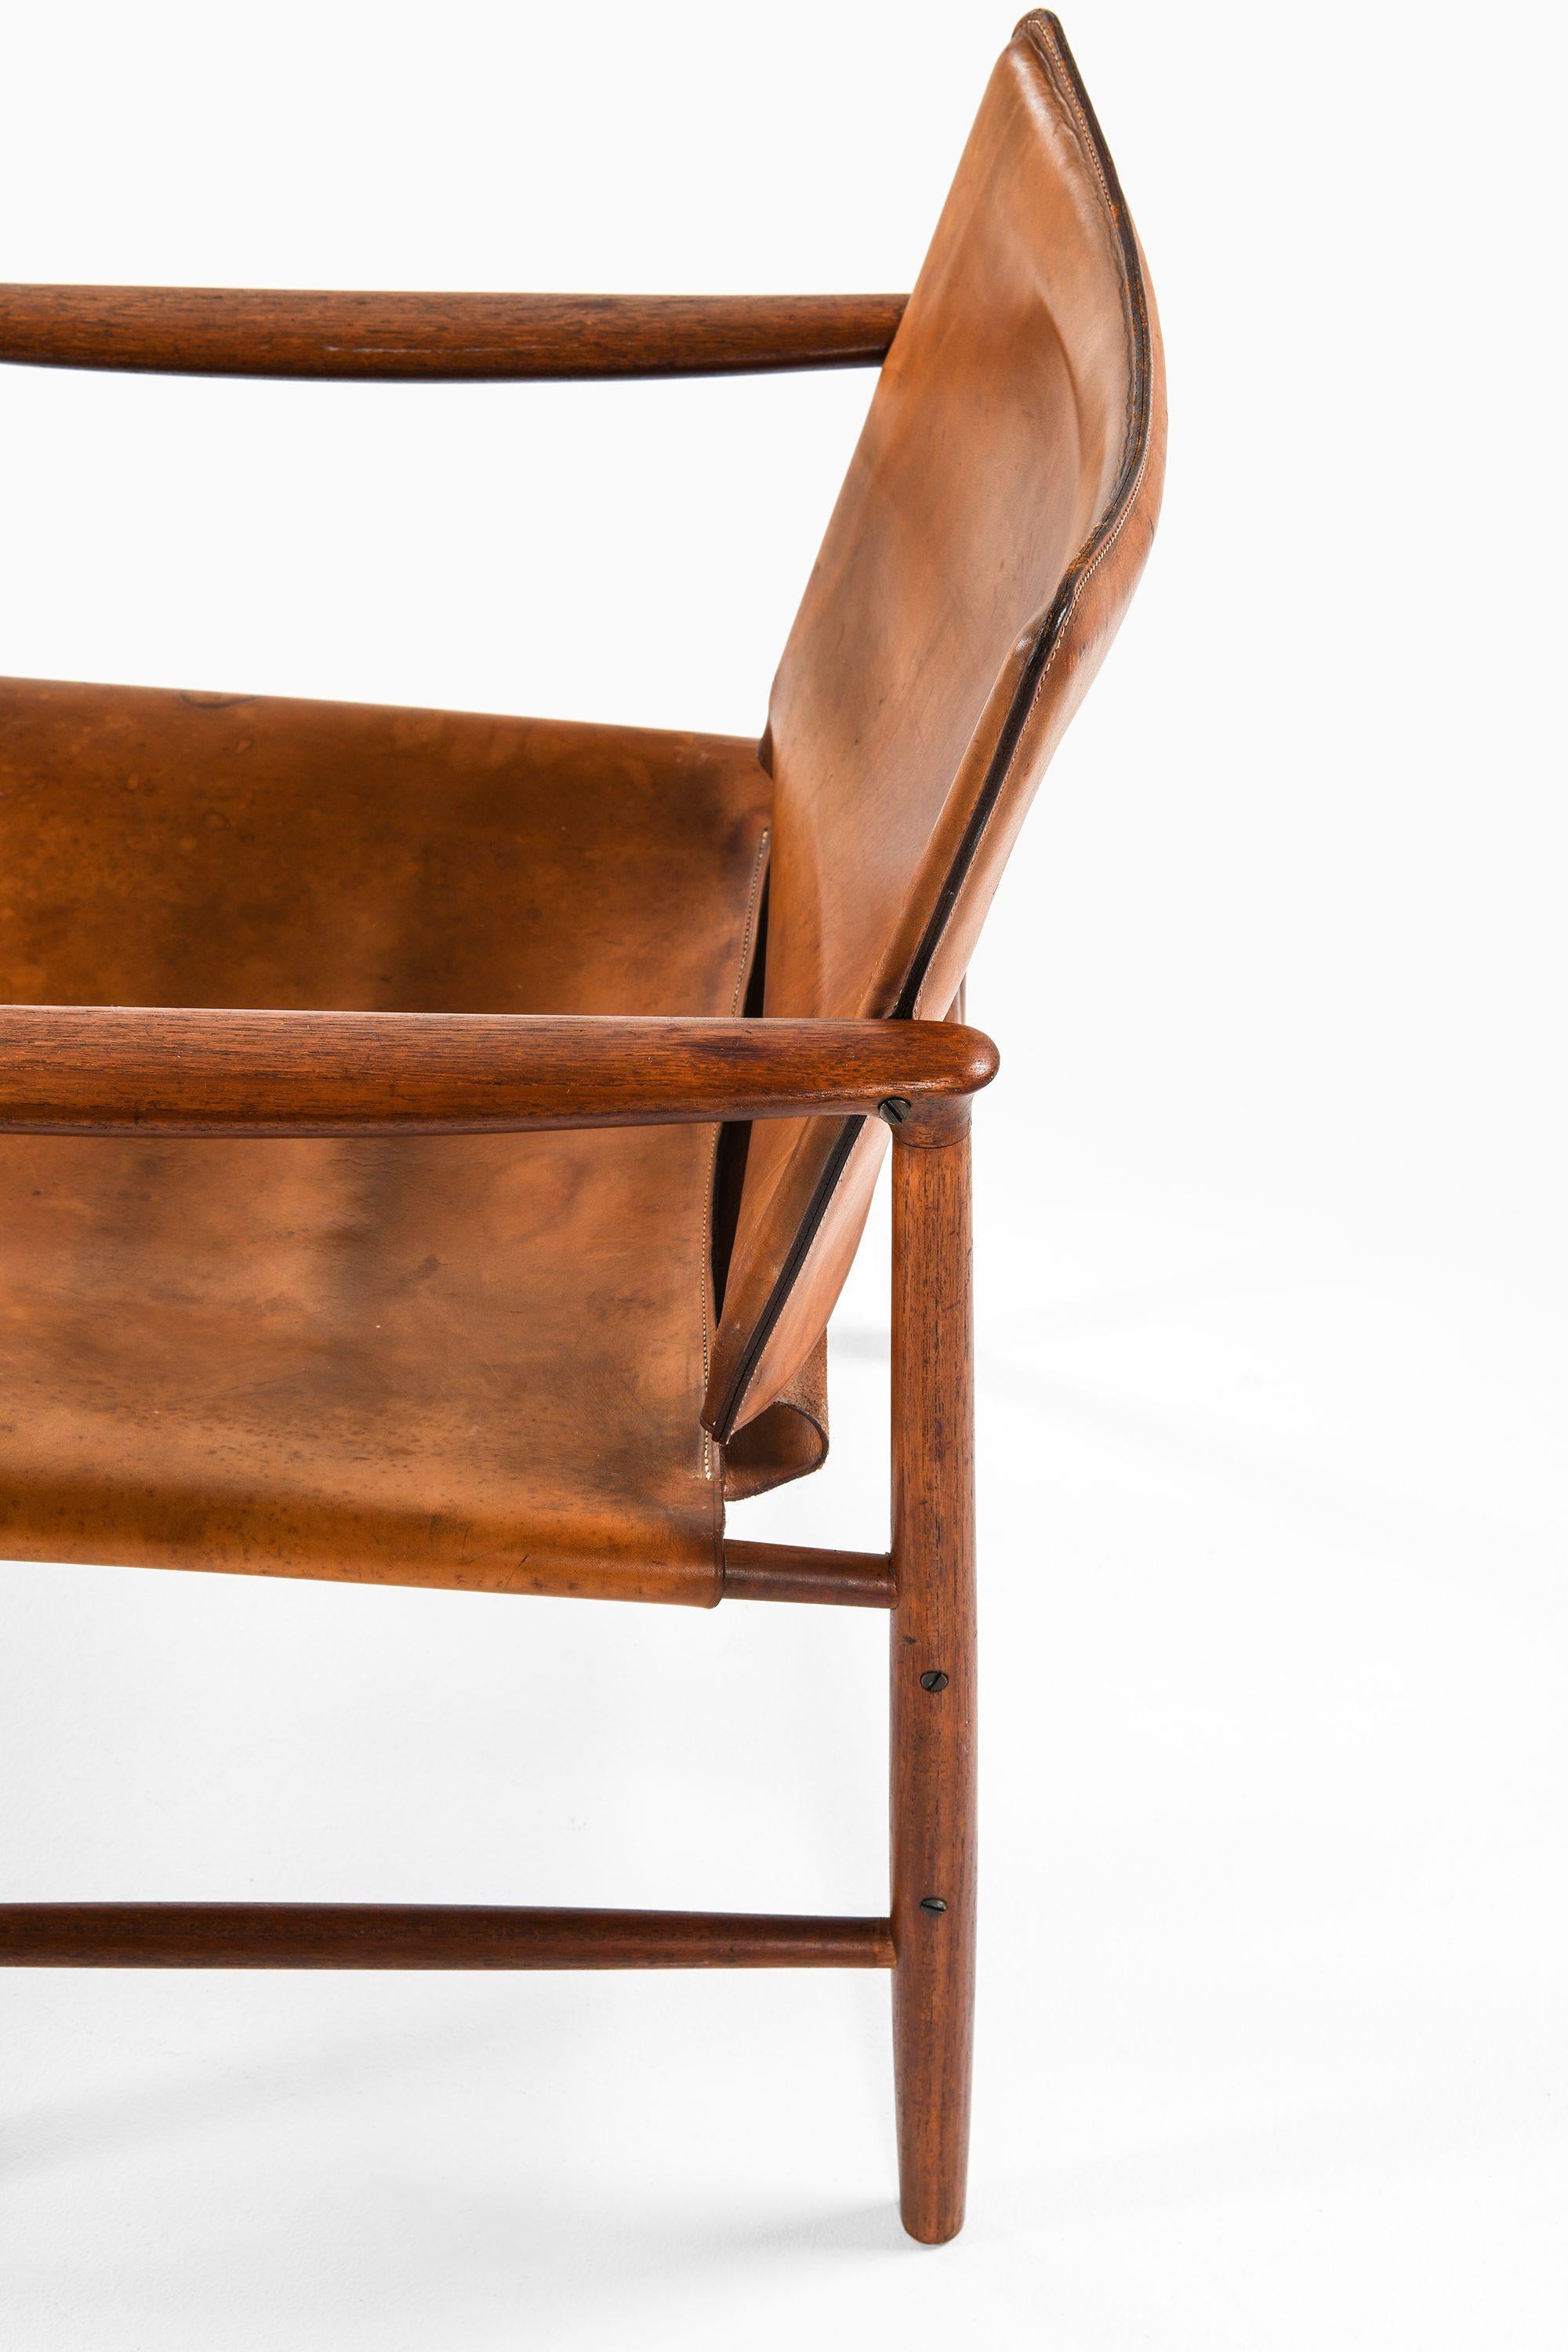 20th Century Armchair in Teak and Leather by Kai Lyngfeldt Larsen, 1957 For Sale